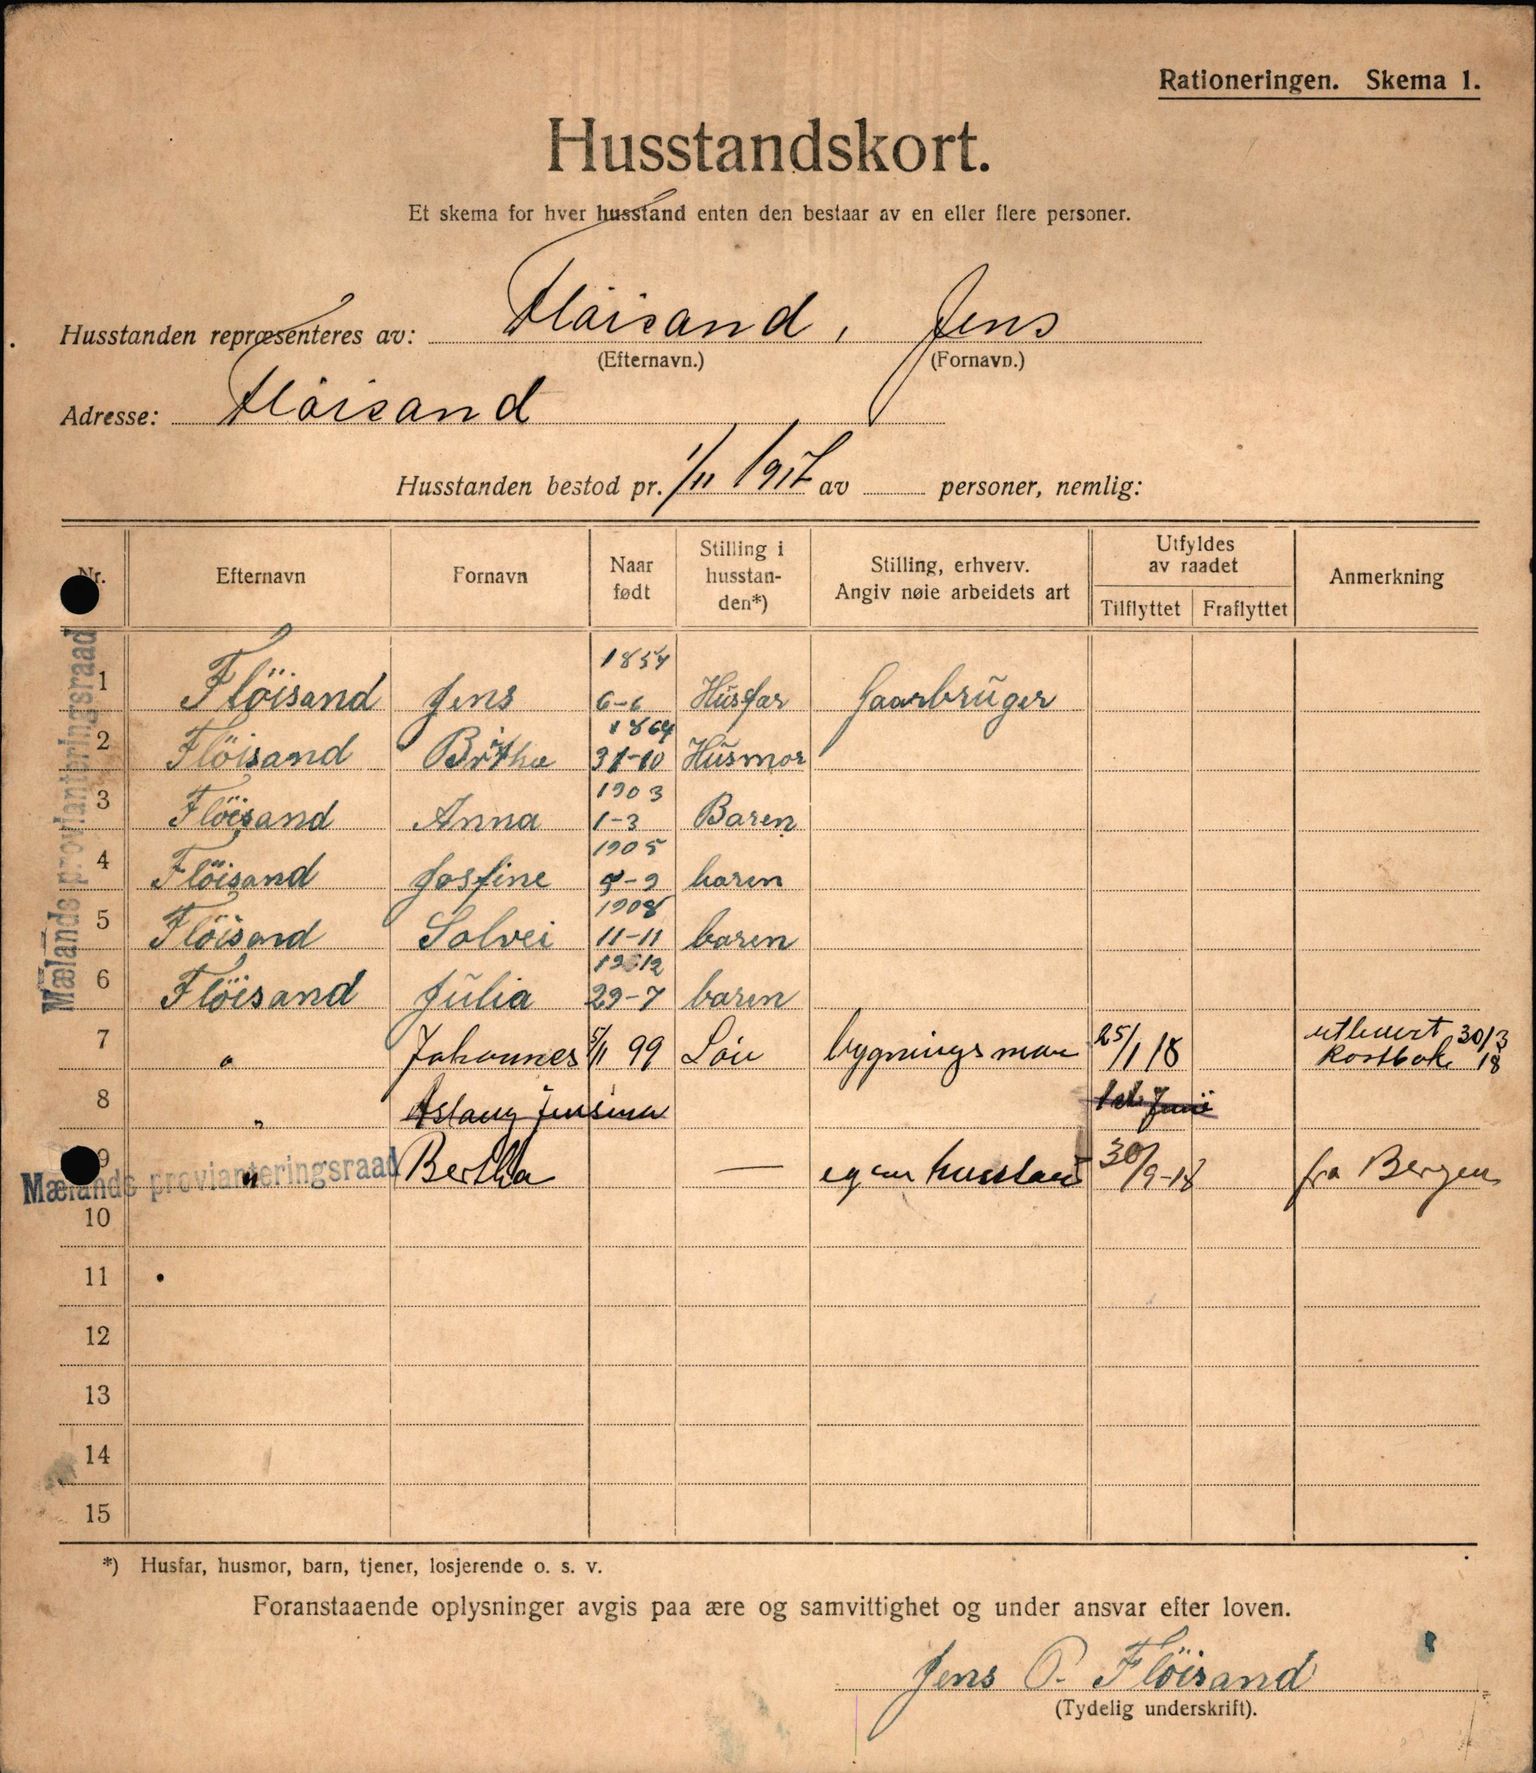 IKAH, Meland kommune, Provianteringsrådet, Husstander per 01.11.1917, 1917-1918, p. 48